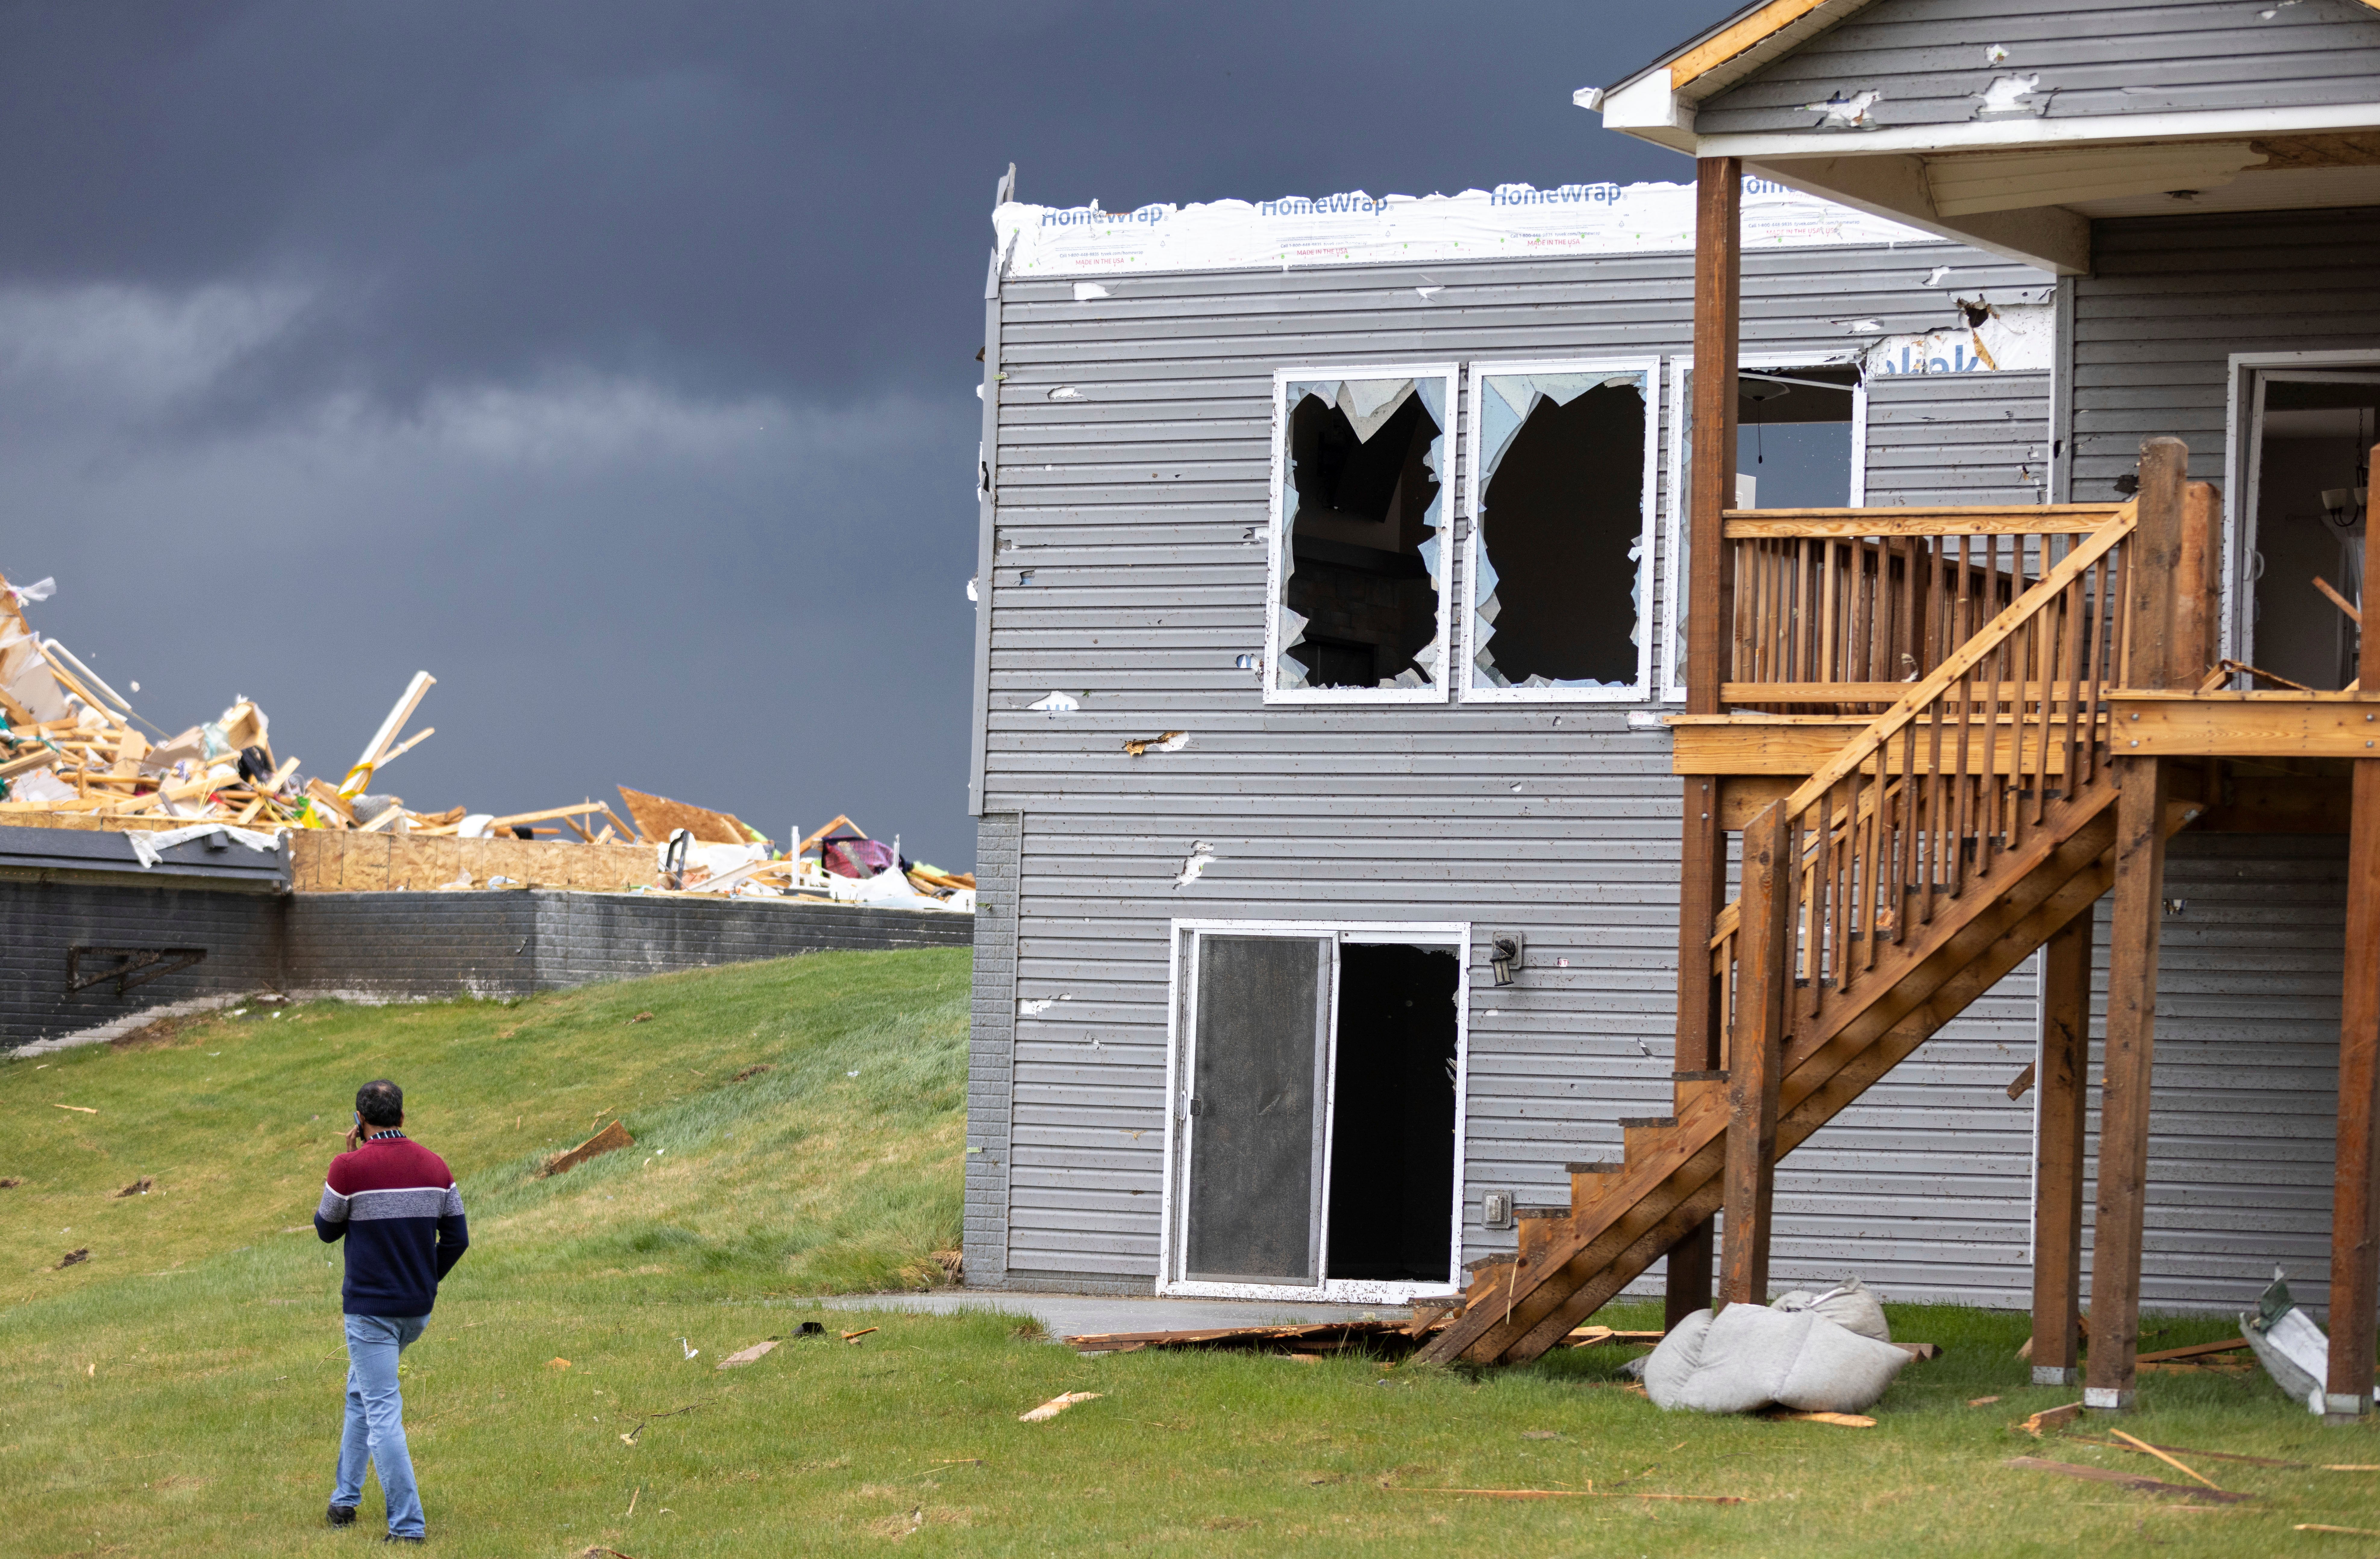 Gopala Penmetsa walks past a damaged house after a tornado passed through the area near Omaha, Nebraska on 26 April